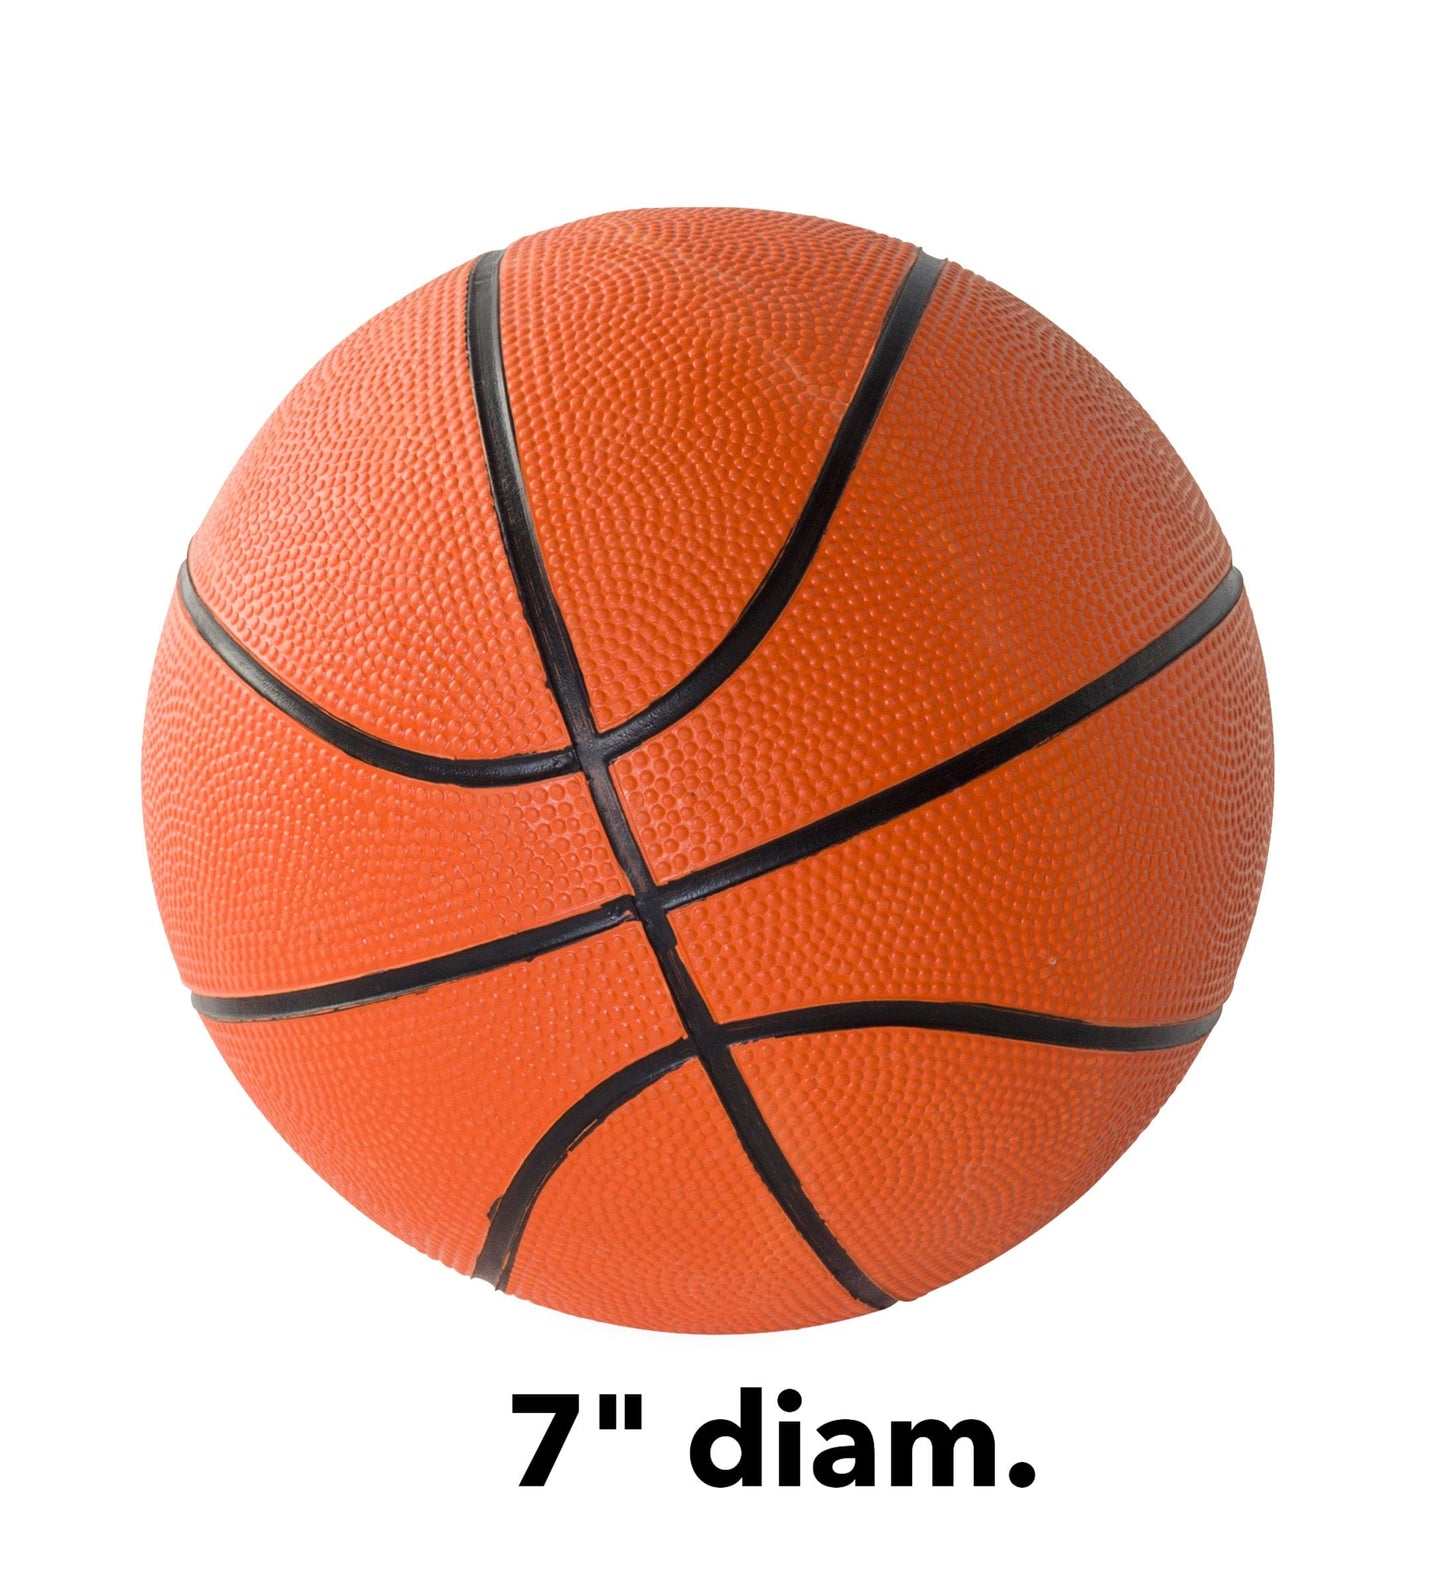 Double Free-Throw Basketball Challenge Game